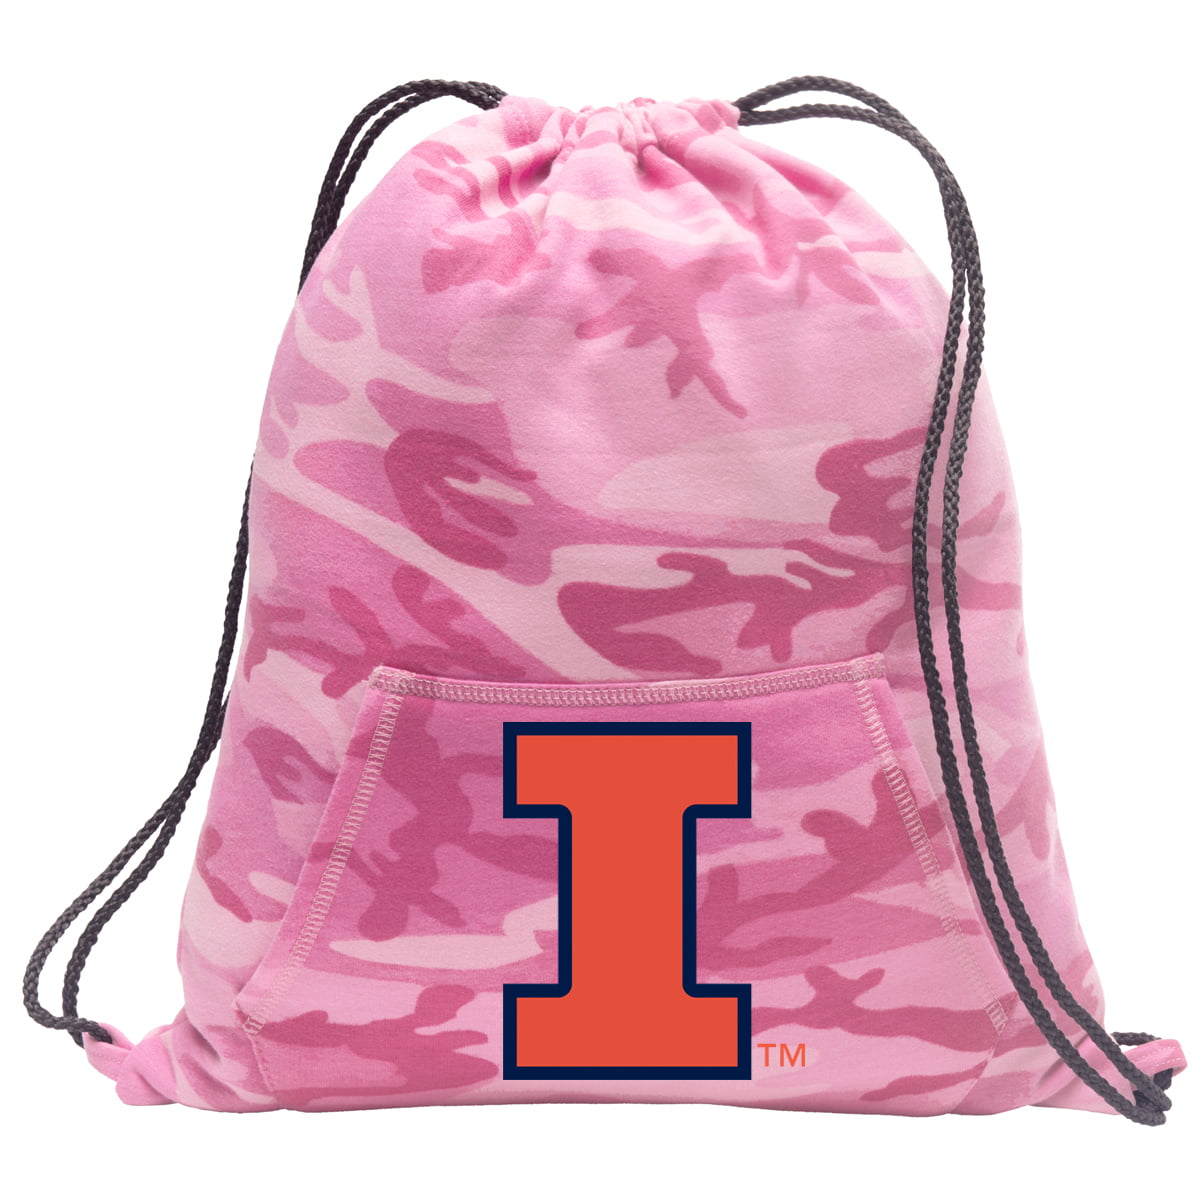 LSU Backpack COOL PINK CAMO CINCH PACKS Drawstring Bags 